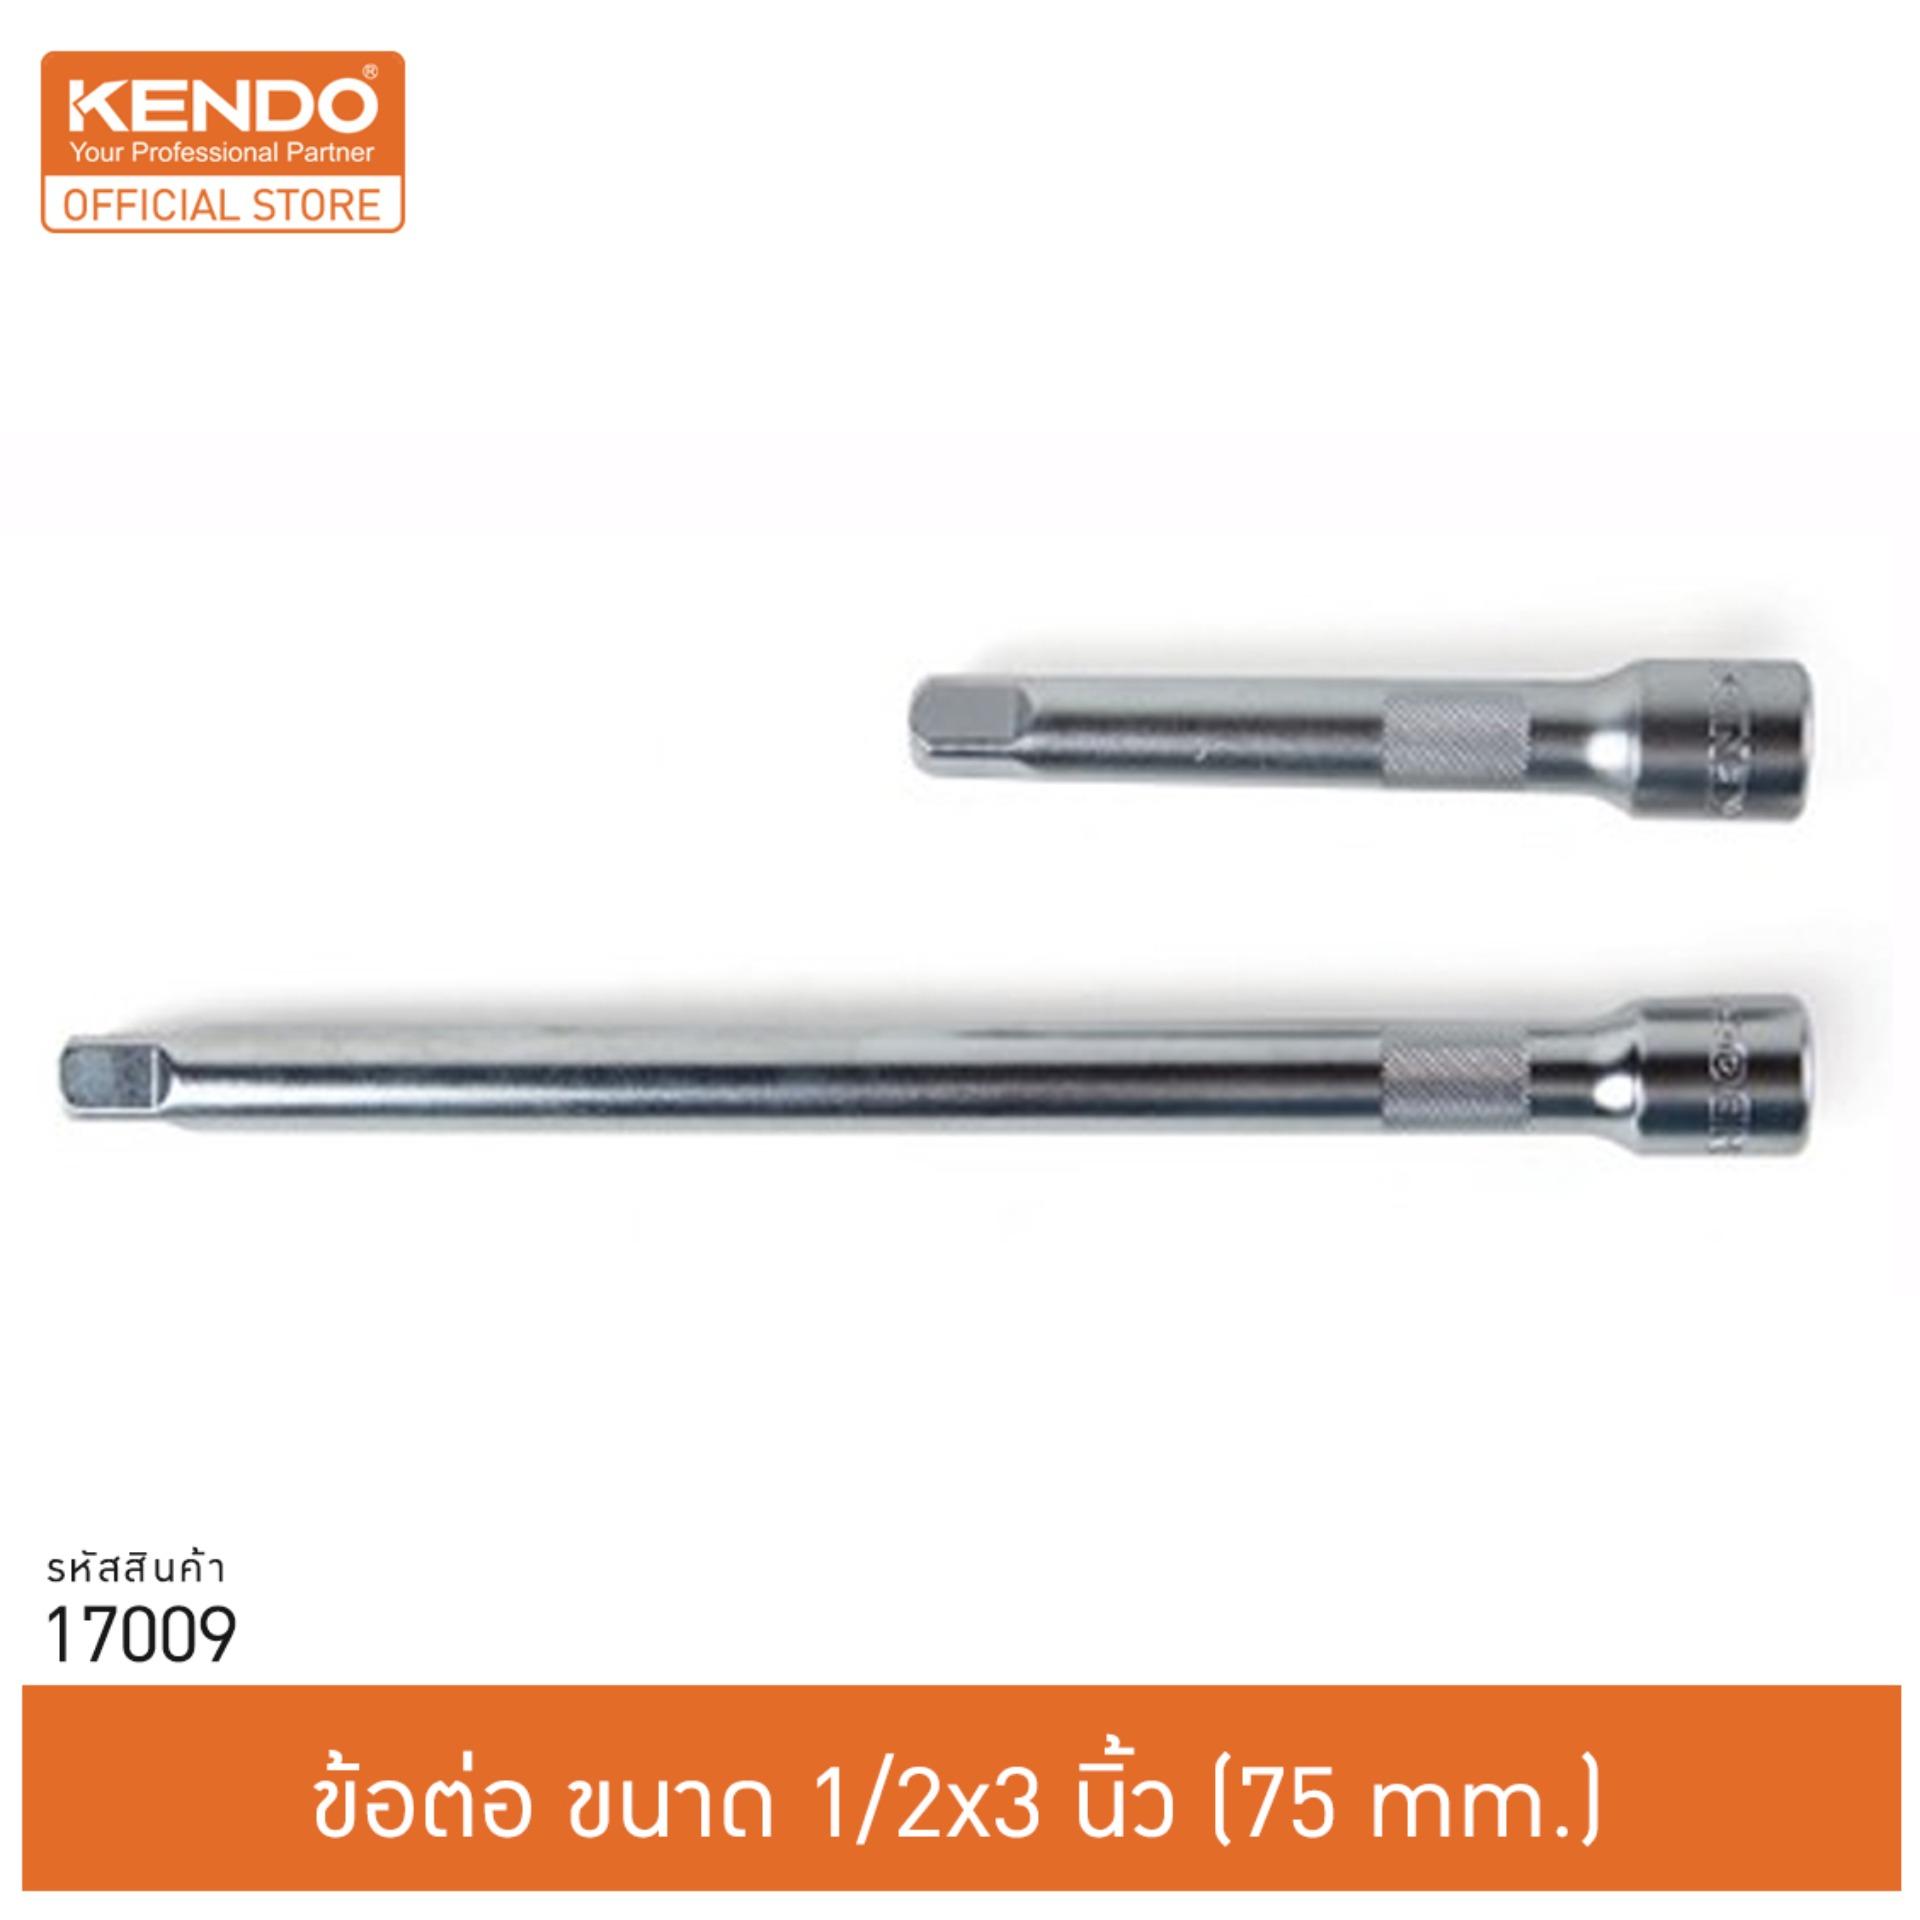 KENDO 17009 ข้อต่อ ขนาด 1/2 x3  (75mm.)